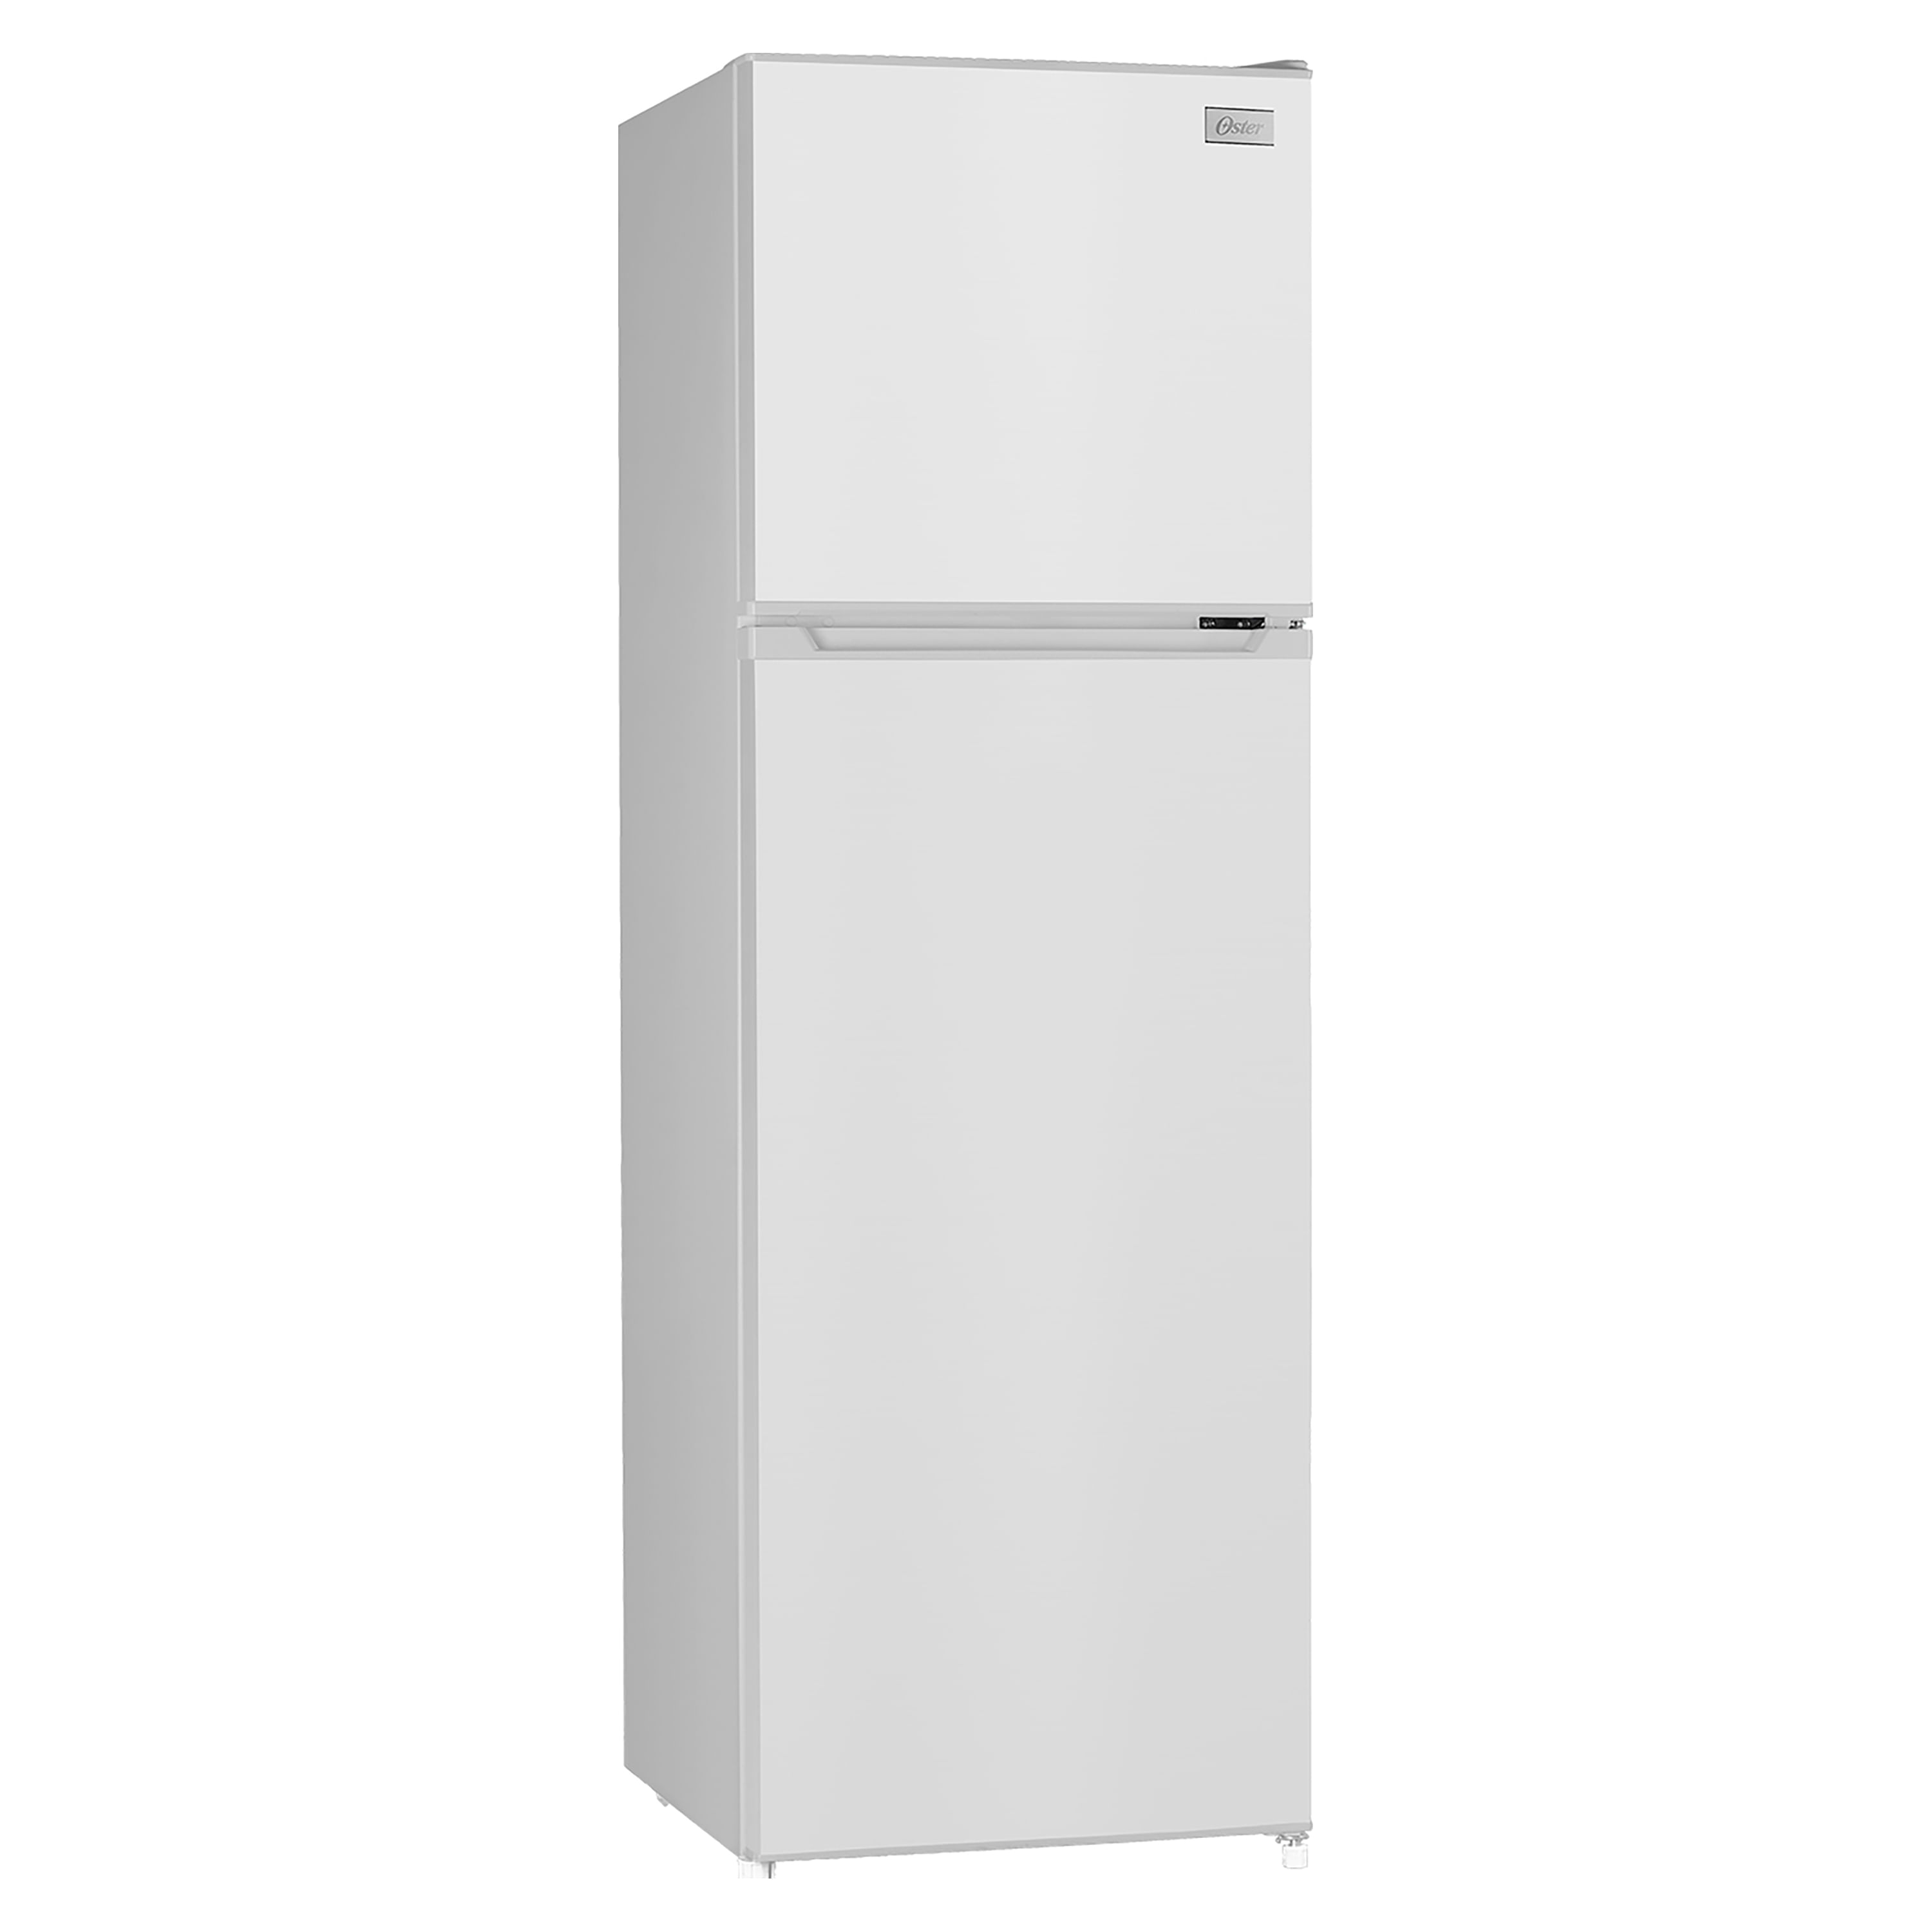 Refrigeradora-Oster-No-Frost-9-Pies-1-24503